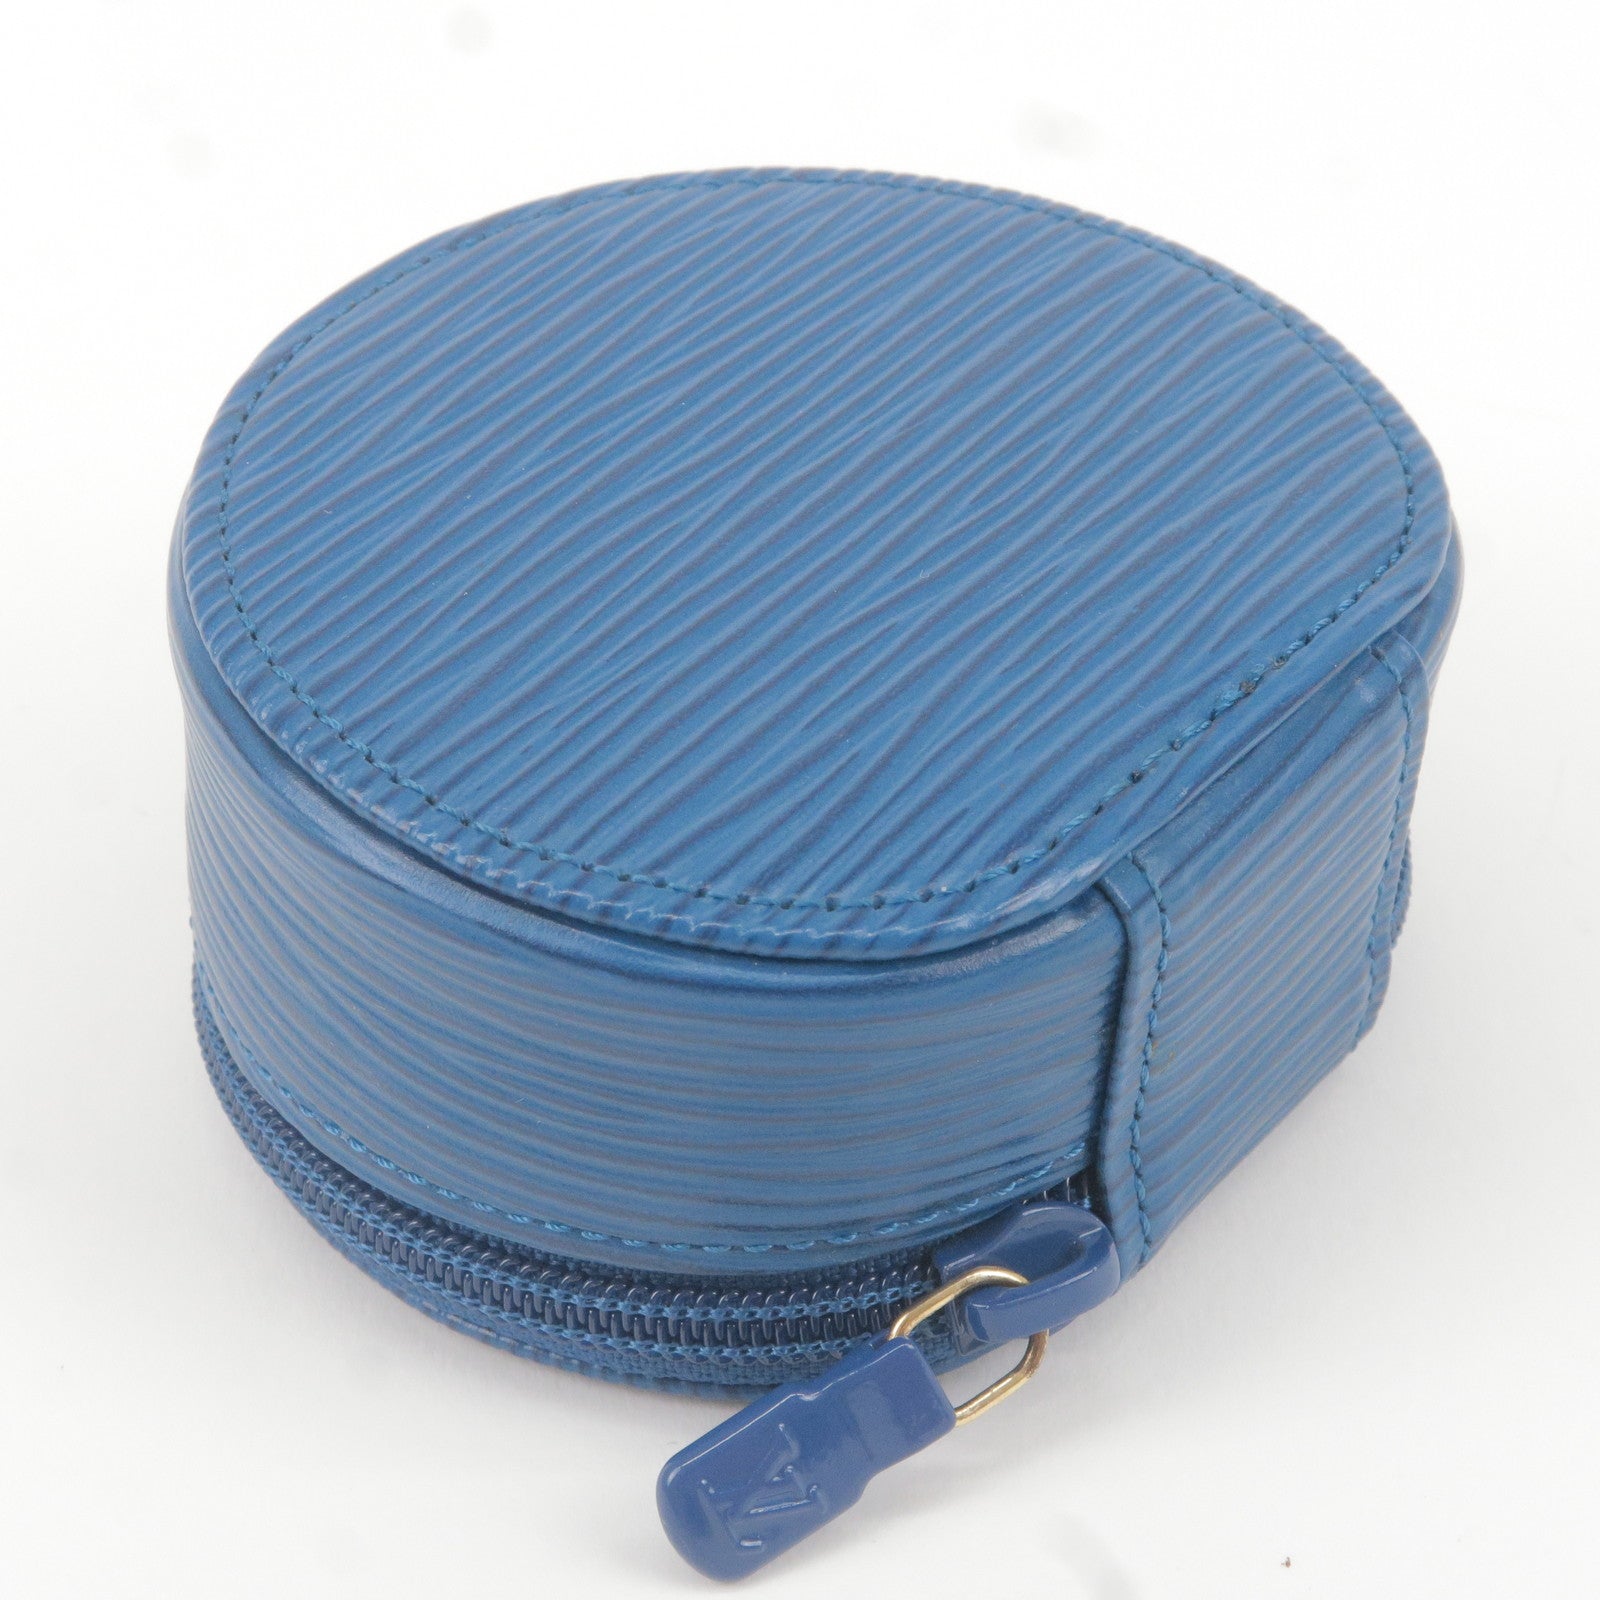 Louis Vuitton Blue Epi Leather Toledo Keepall 45 Boston Duffle Bag